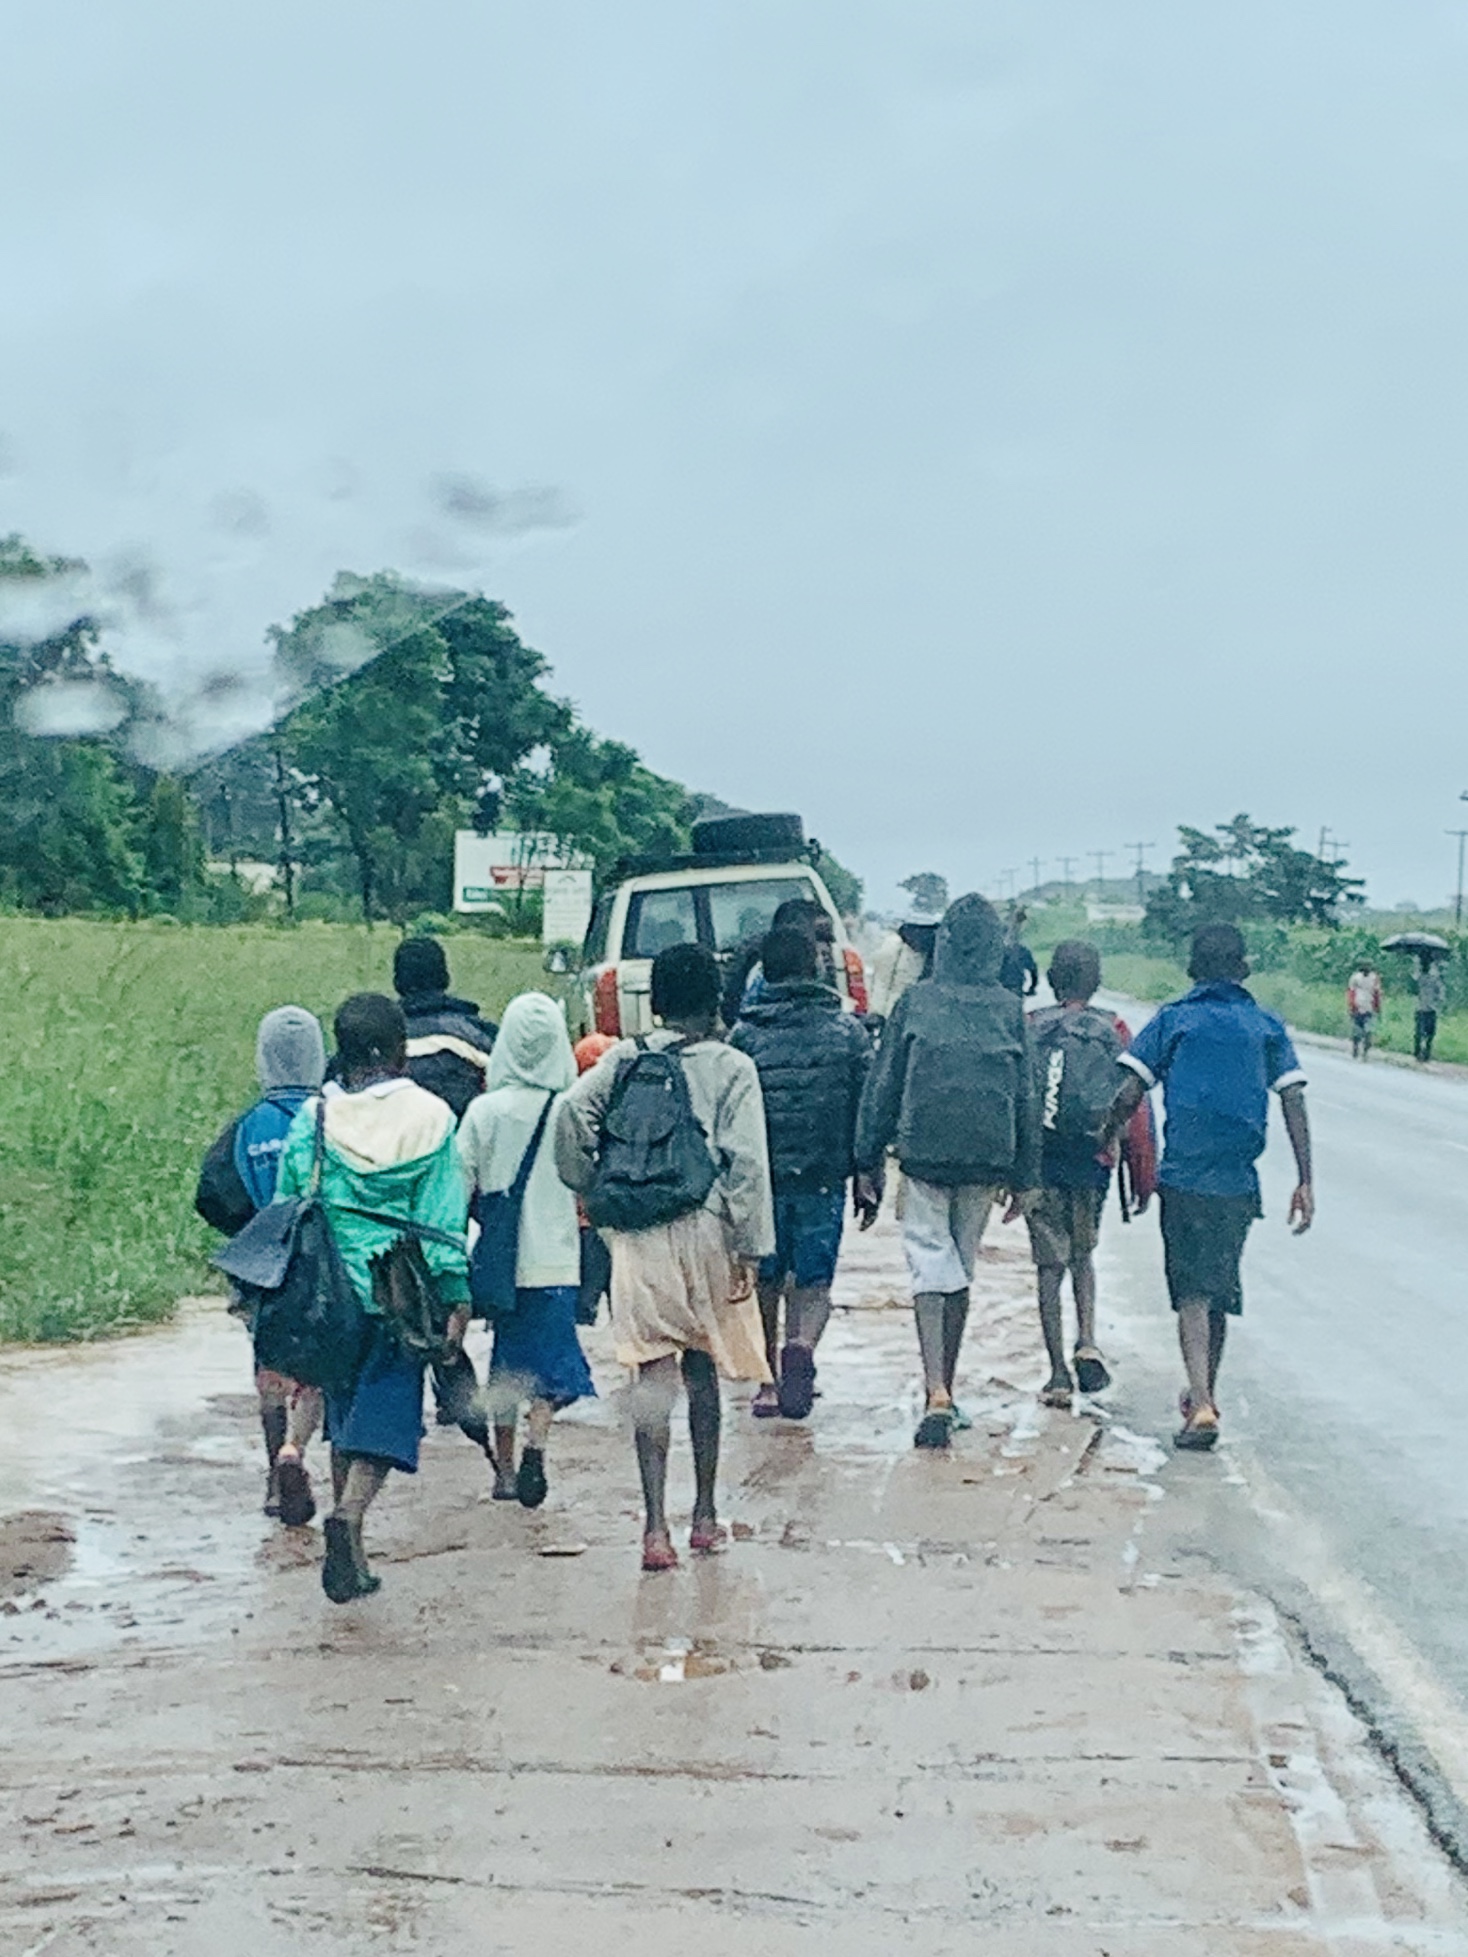 Malawian children walking to school in the rainy season. (Photo by Cheryl Barnes)